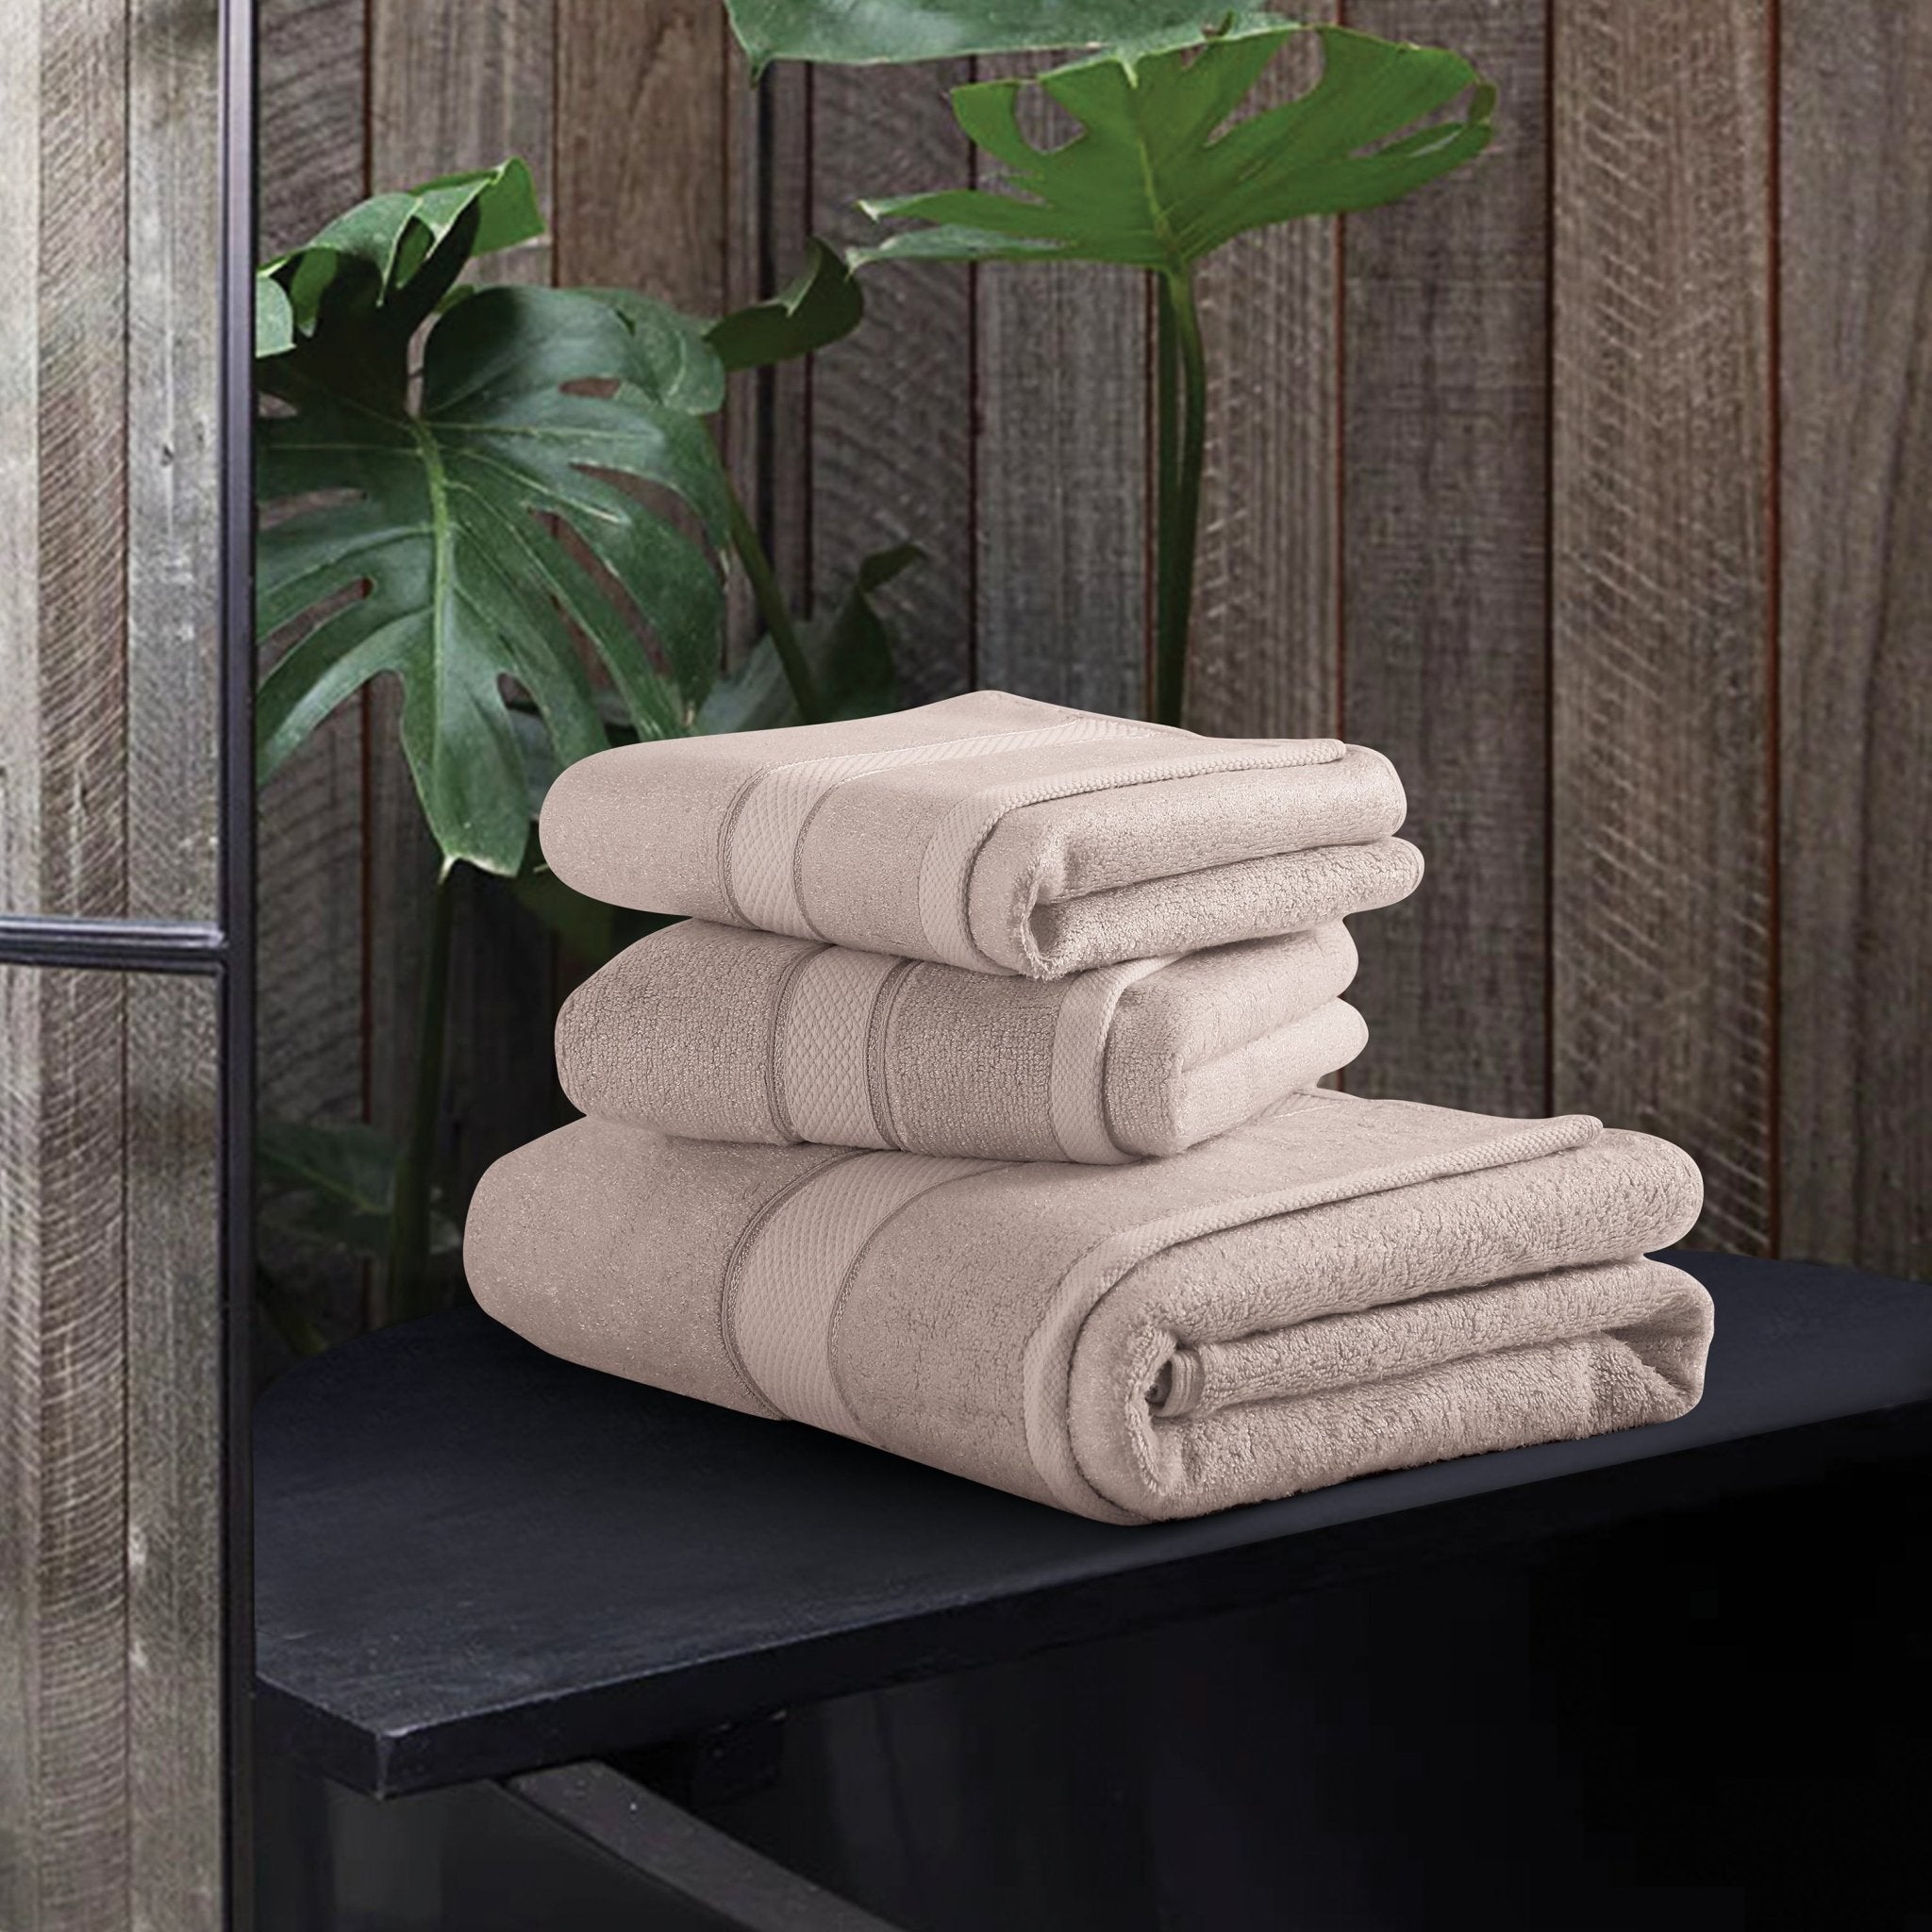 Malako Bamboo Towels (600GSM) - MALAKO